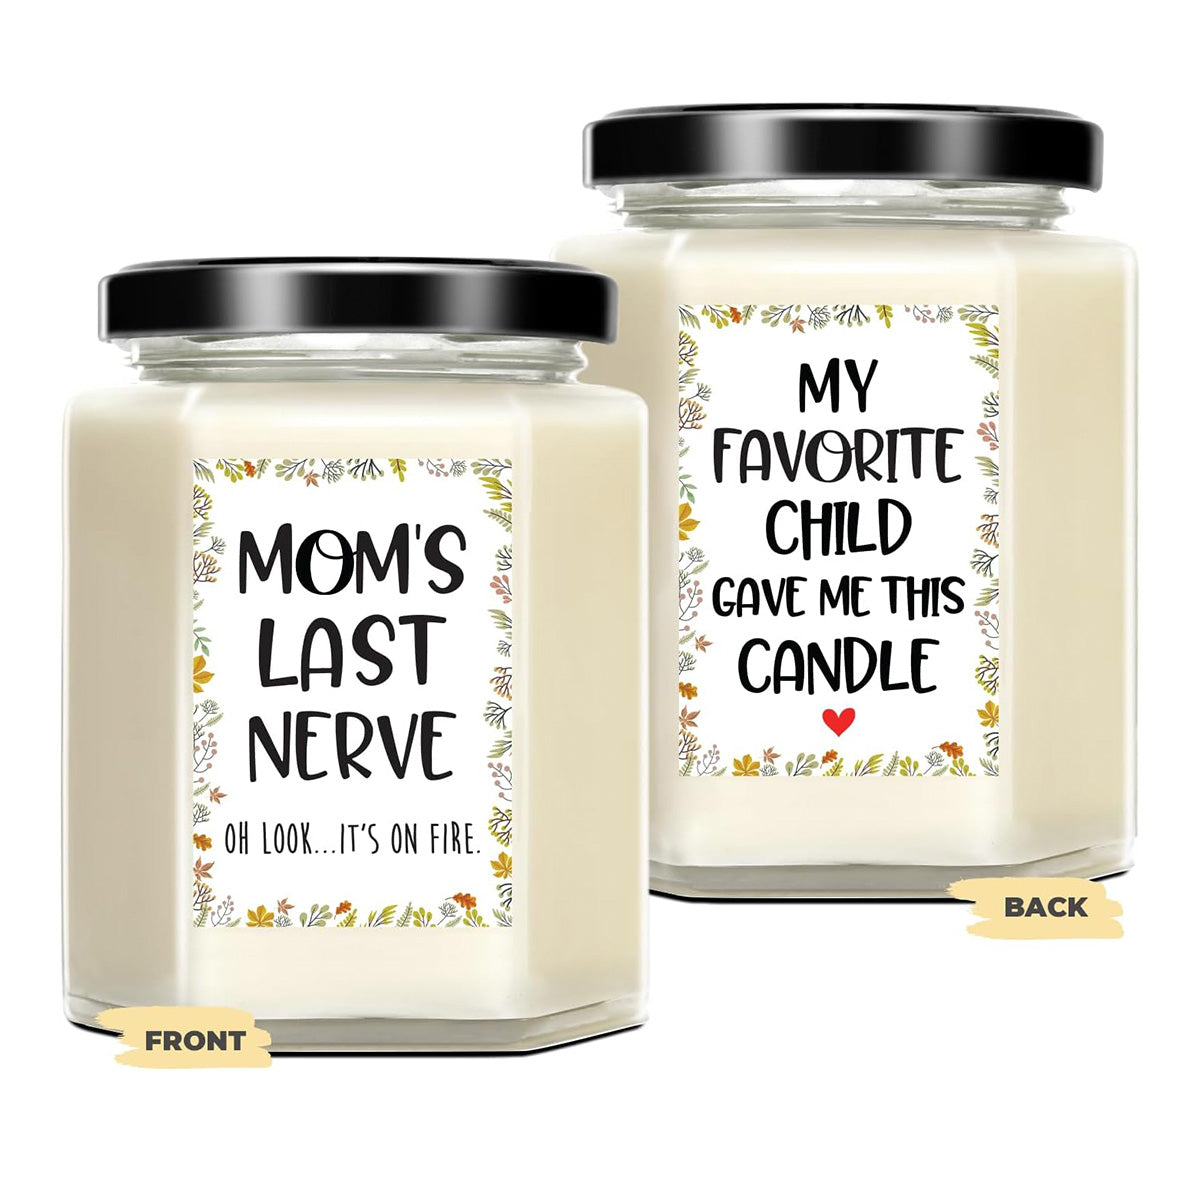 Mom’s Last Nerve + My Favorite Child - Lavender Candle 8 Oz